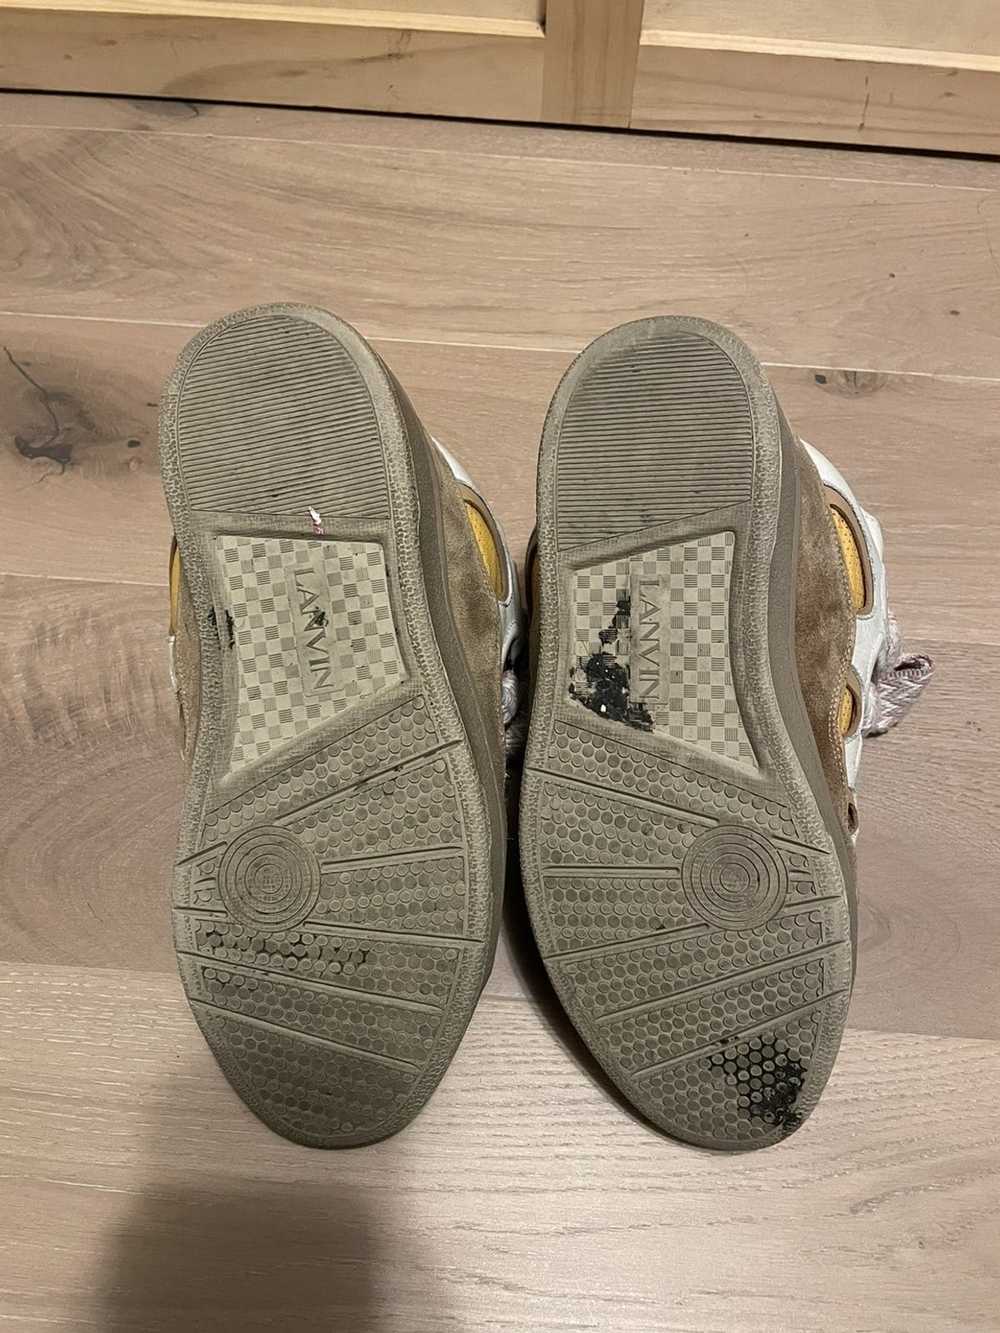 Lanvin Lanvin curb sneakers - image 4